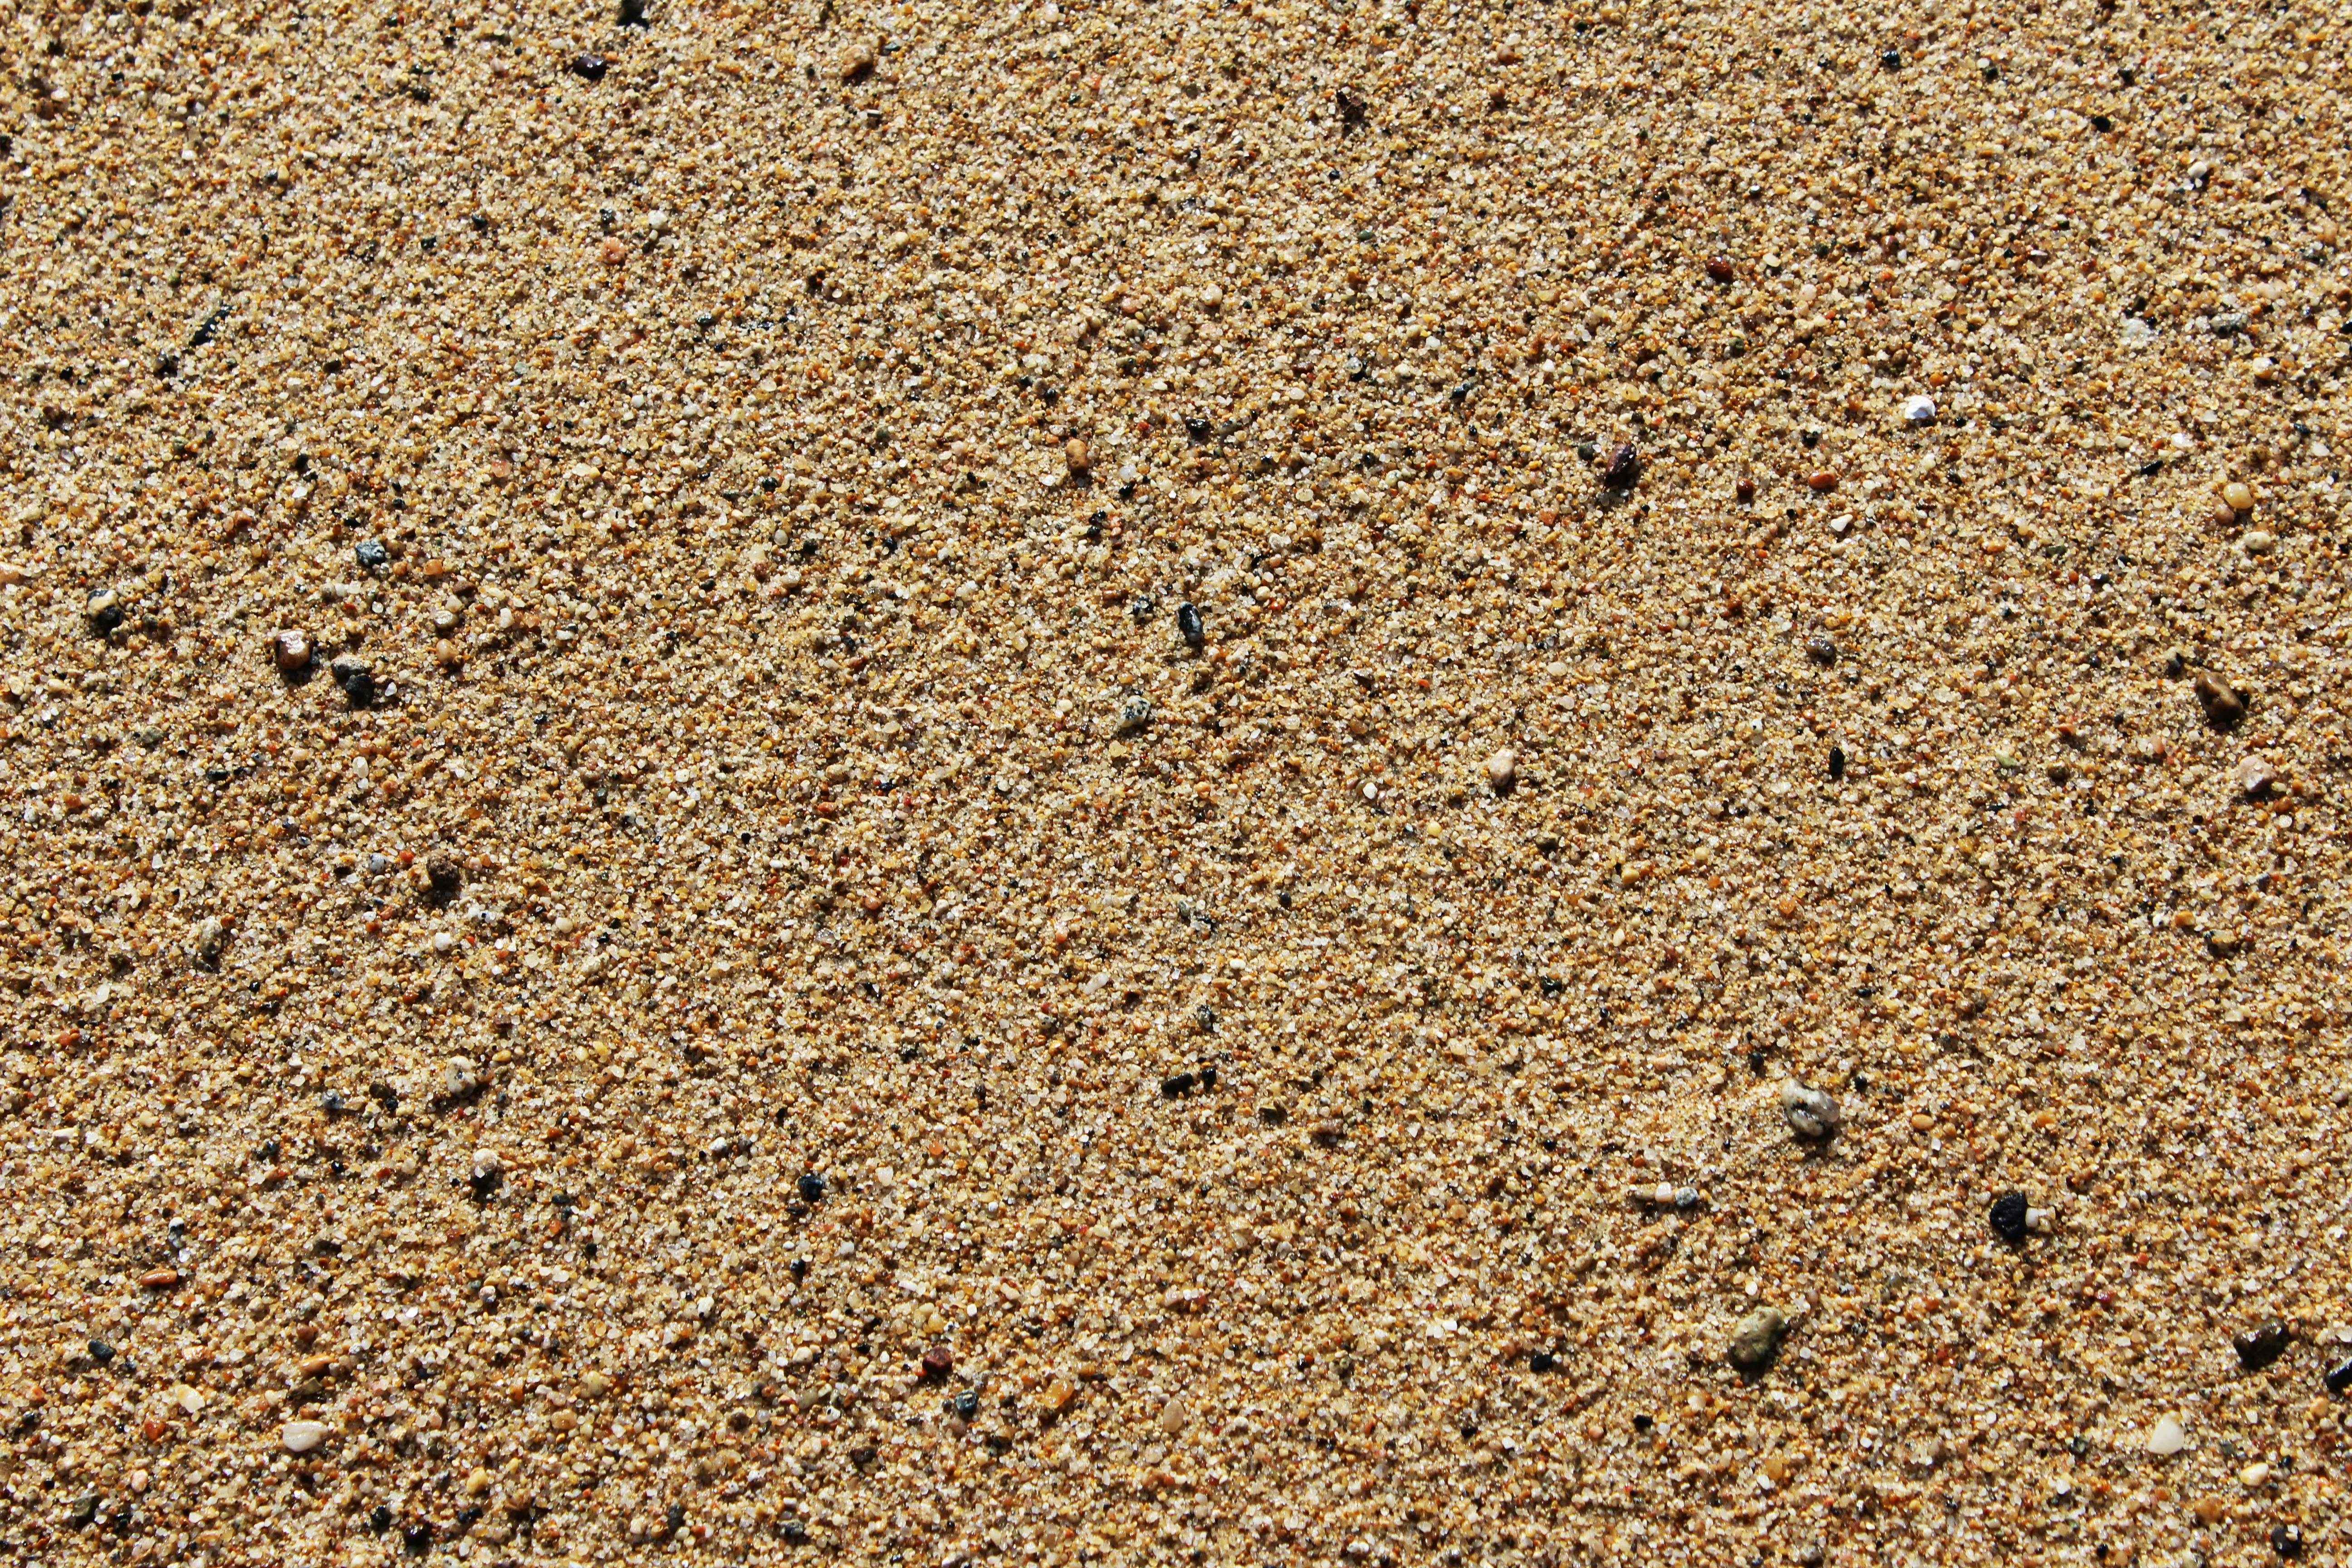 1000+ Amazing Sand Photos · Pexels · Free Stock Photos